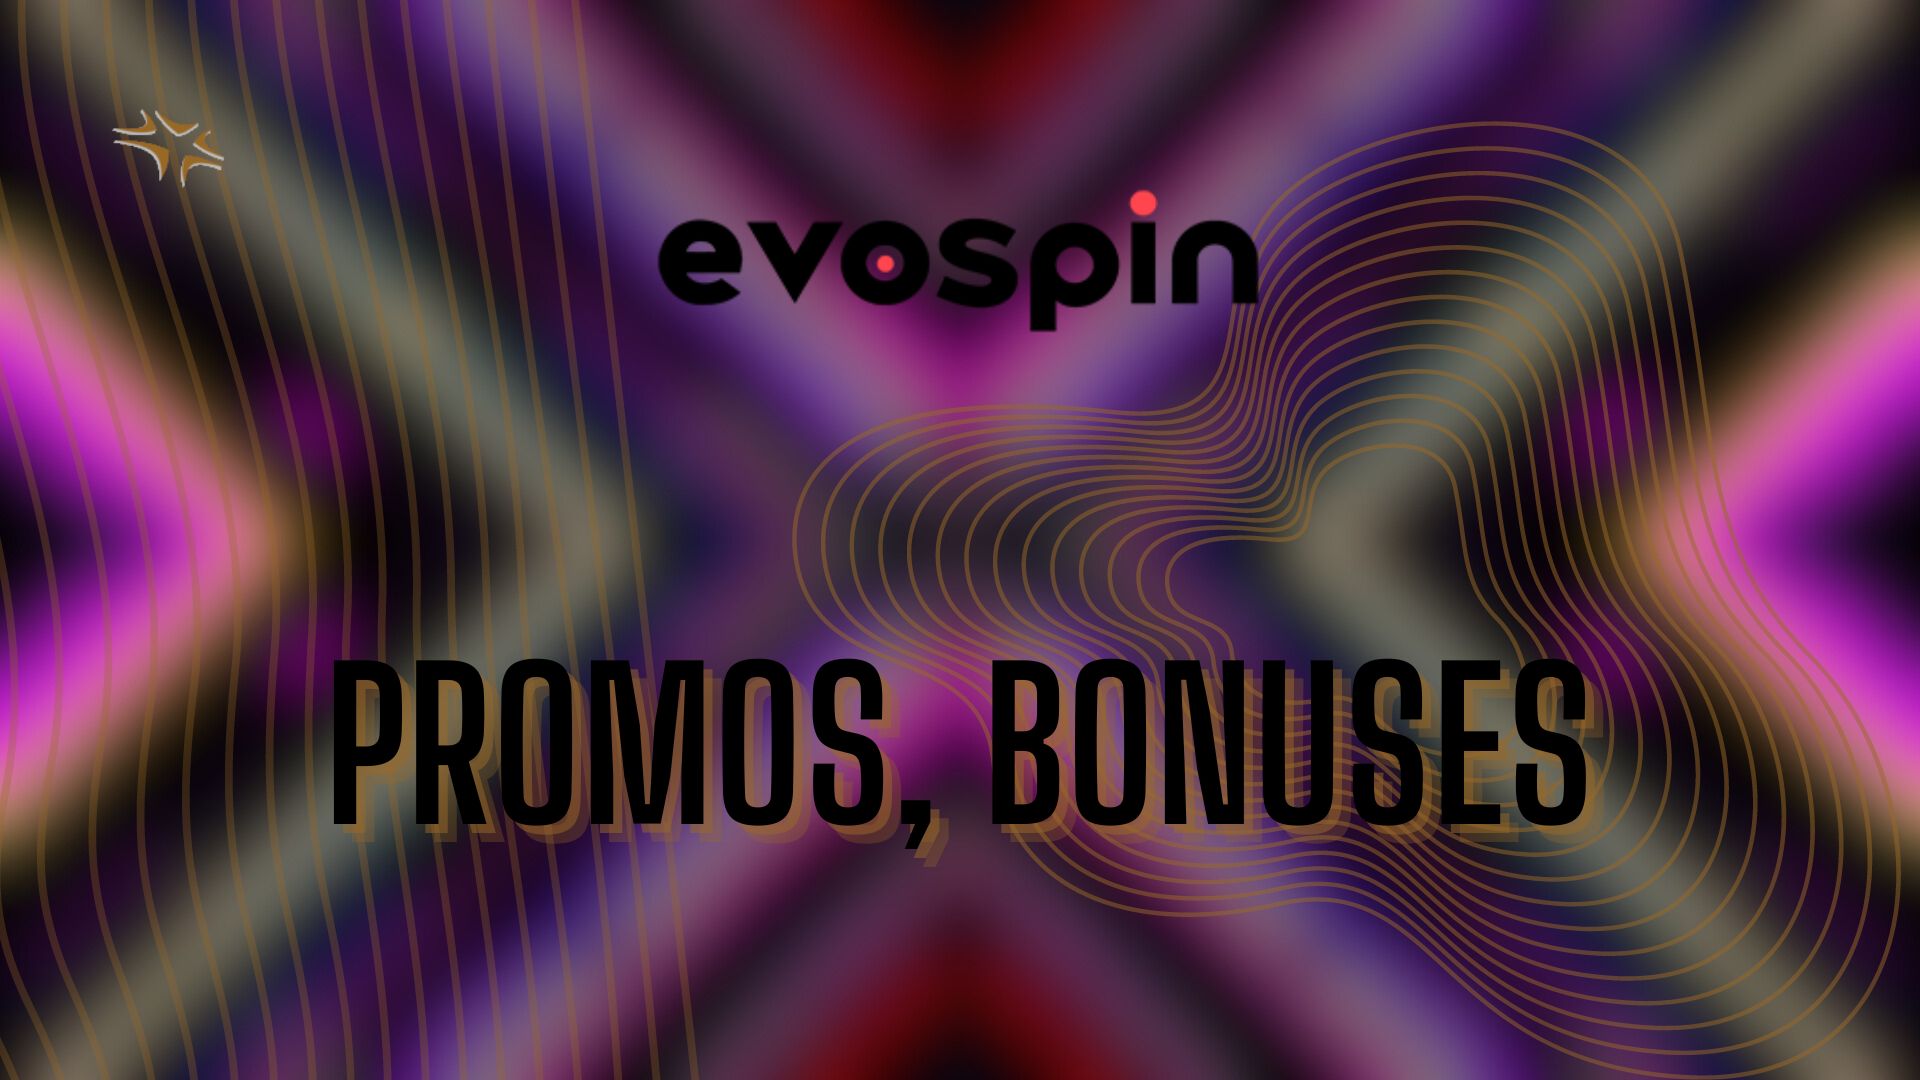 Evospin Promos, Bonuses